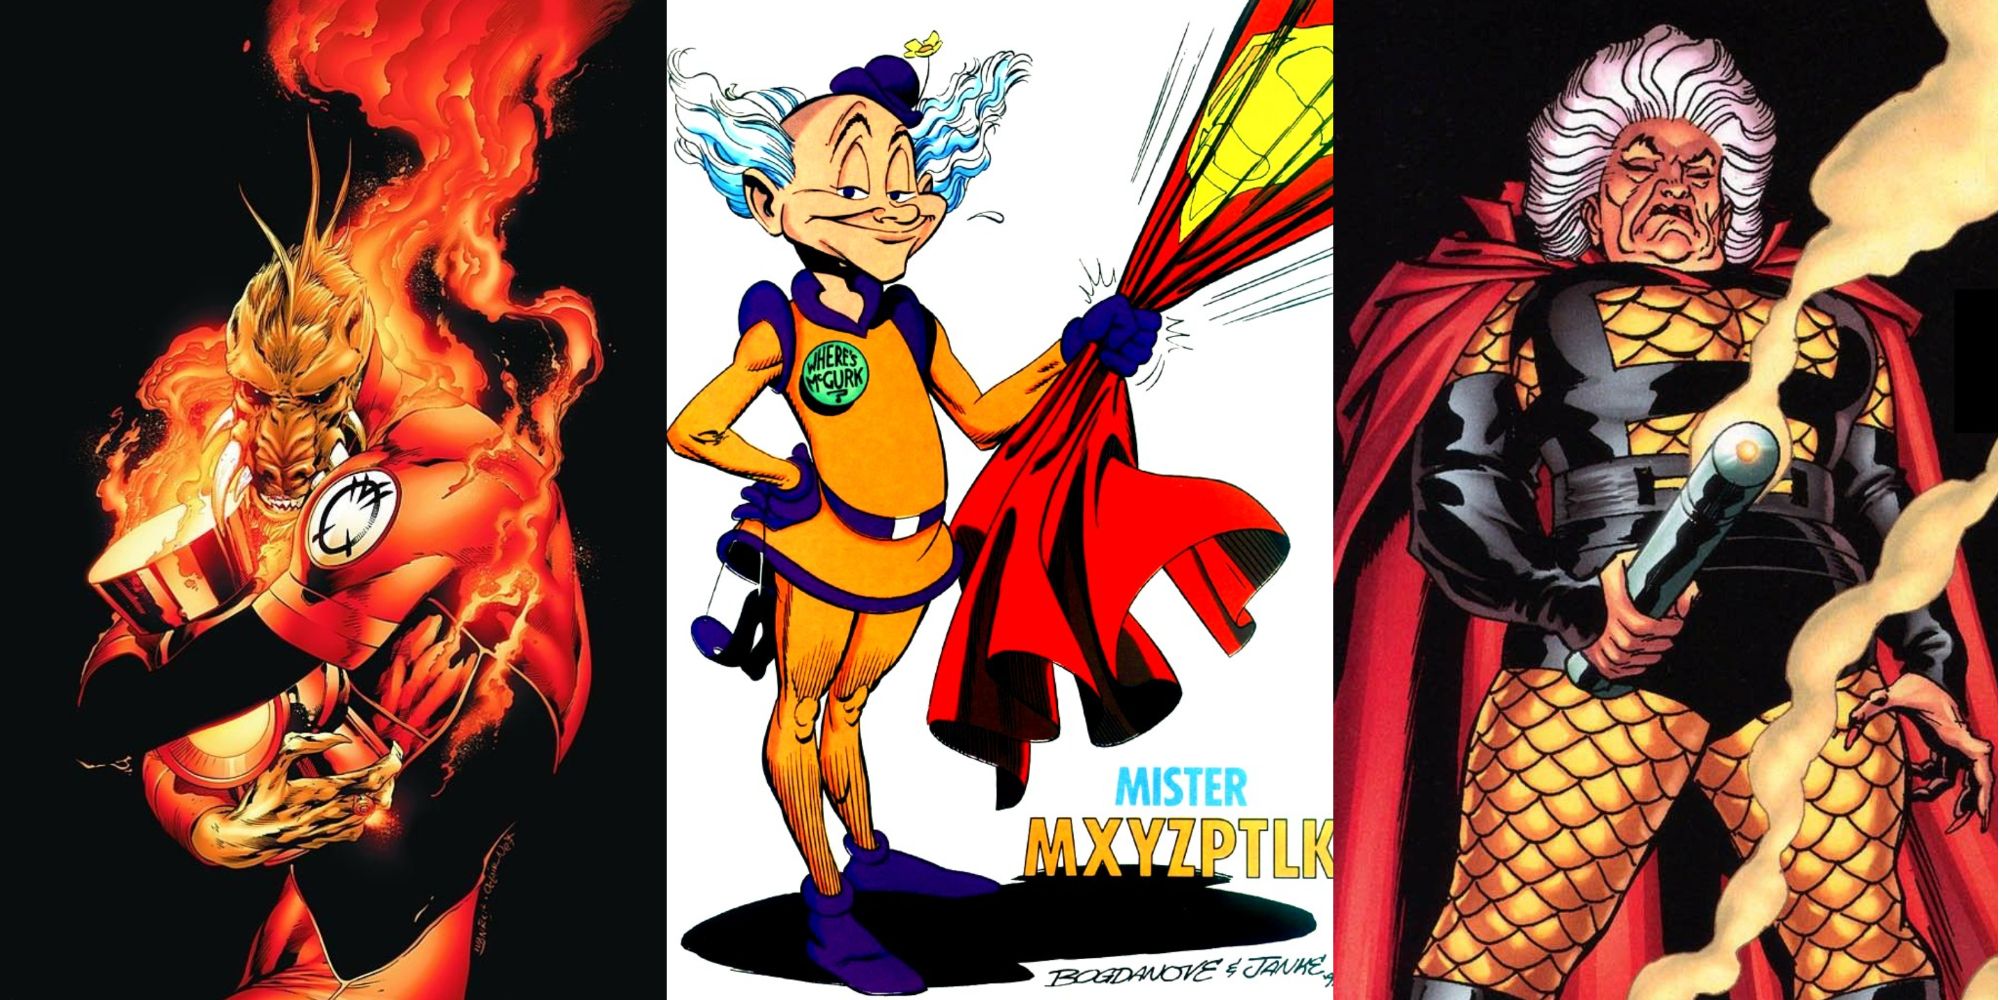 A split image of weird DC villains, including Larfleeze, Mxyzptlk, and Granny Goodness